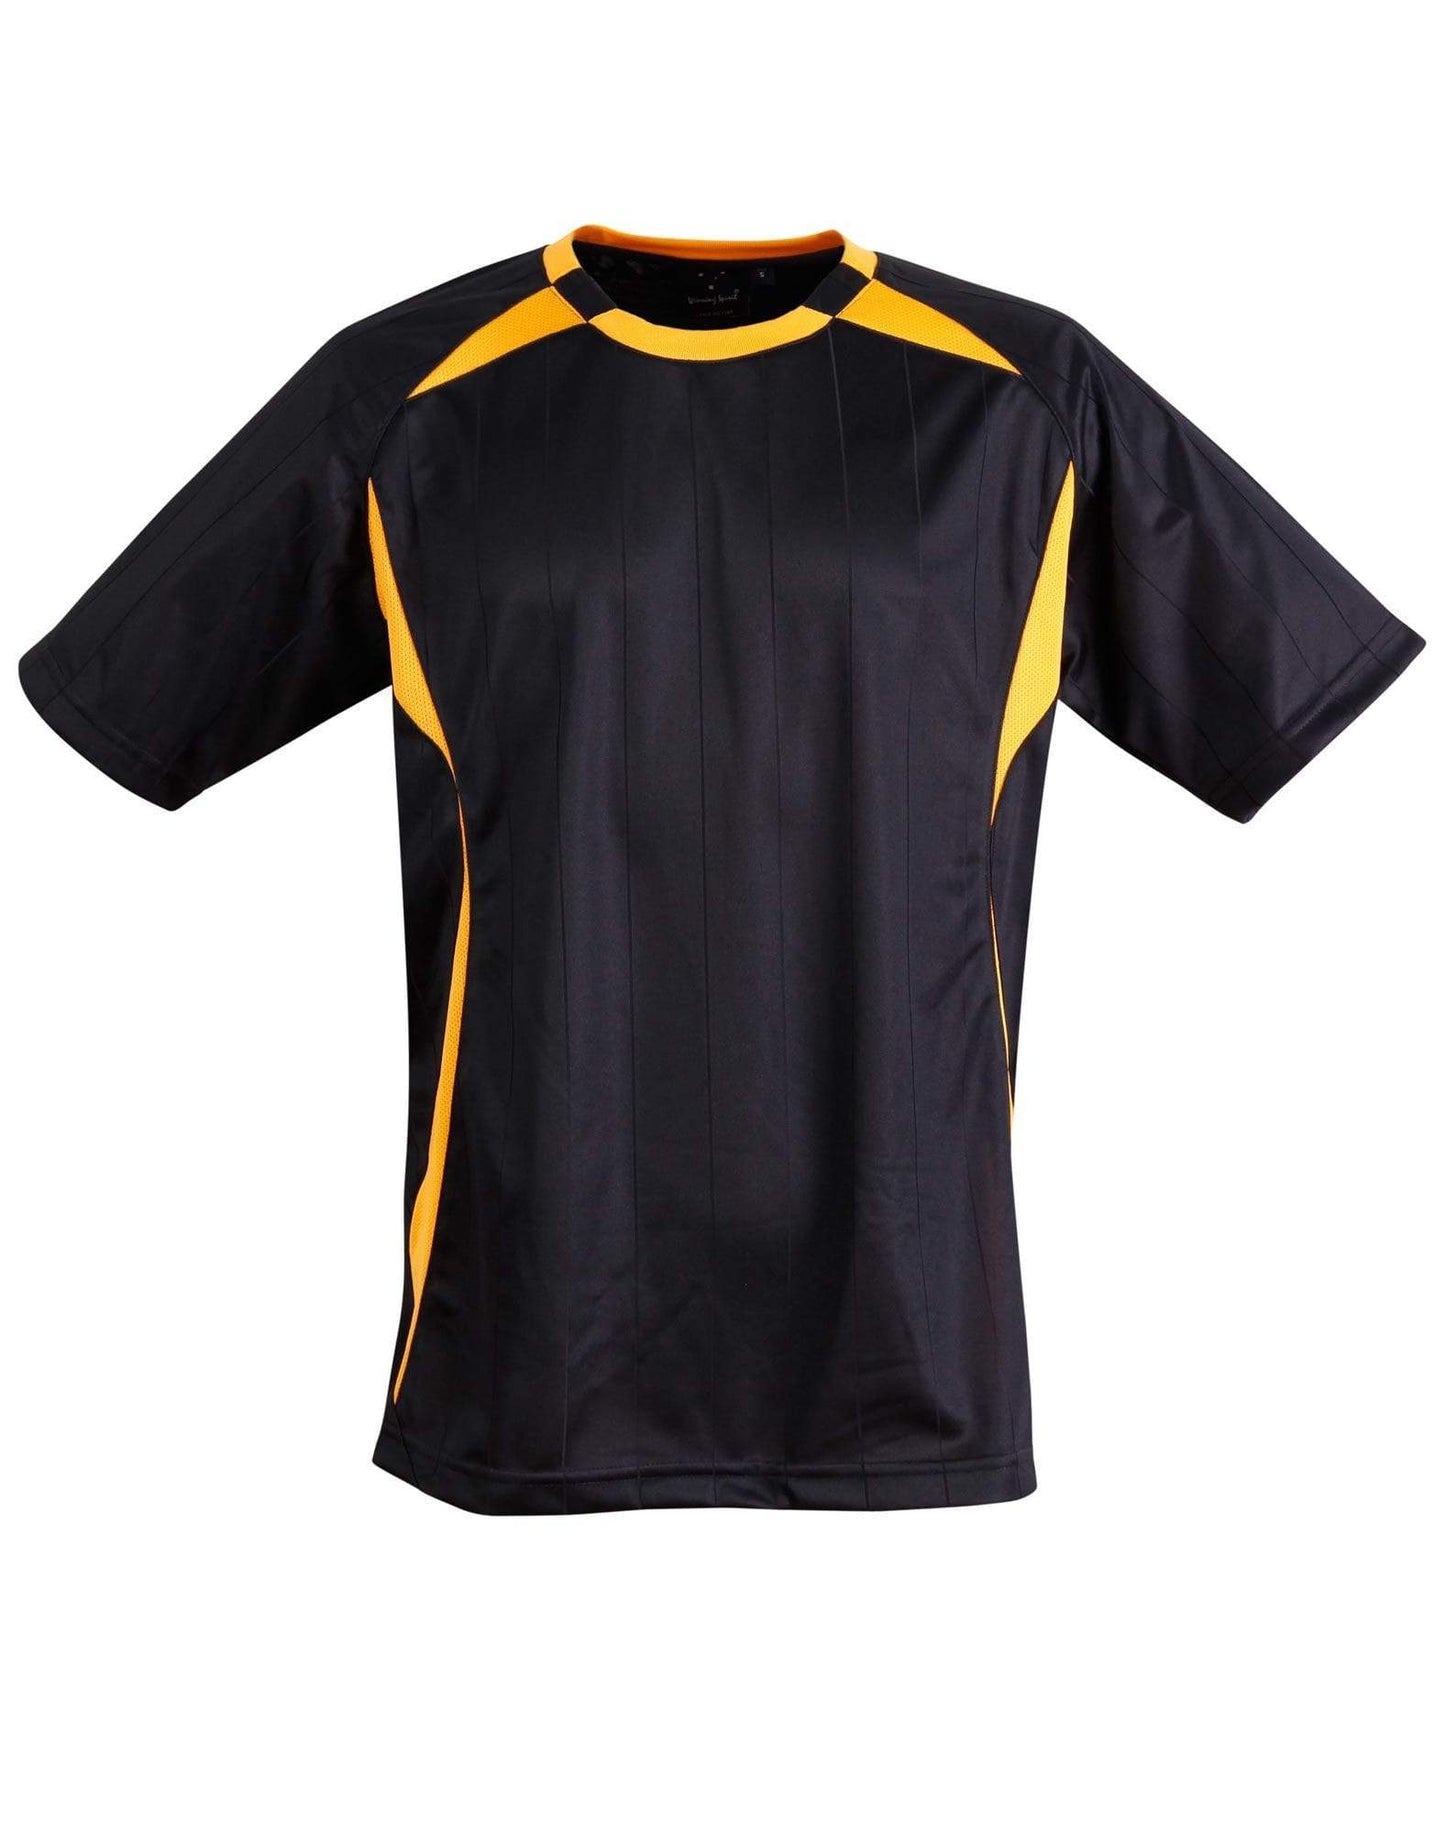 Shoot Soccer Tee Adult Ts85 Casual Wear Winning Spirit Navy/Gold S 